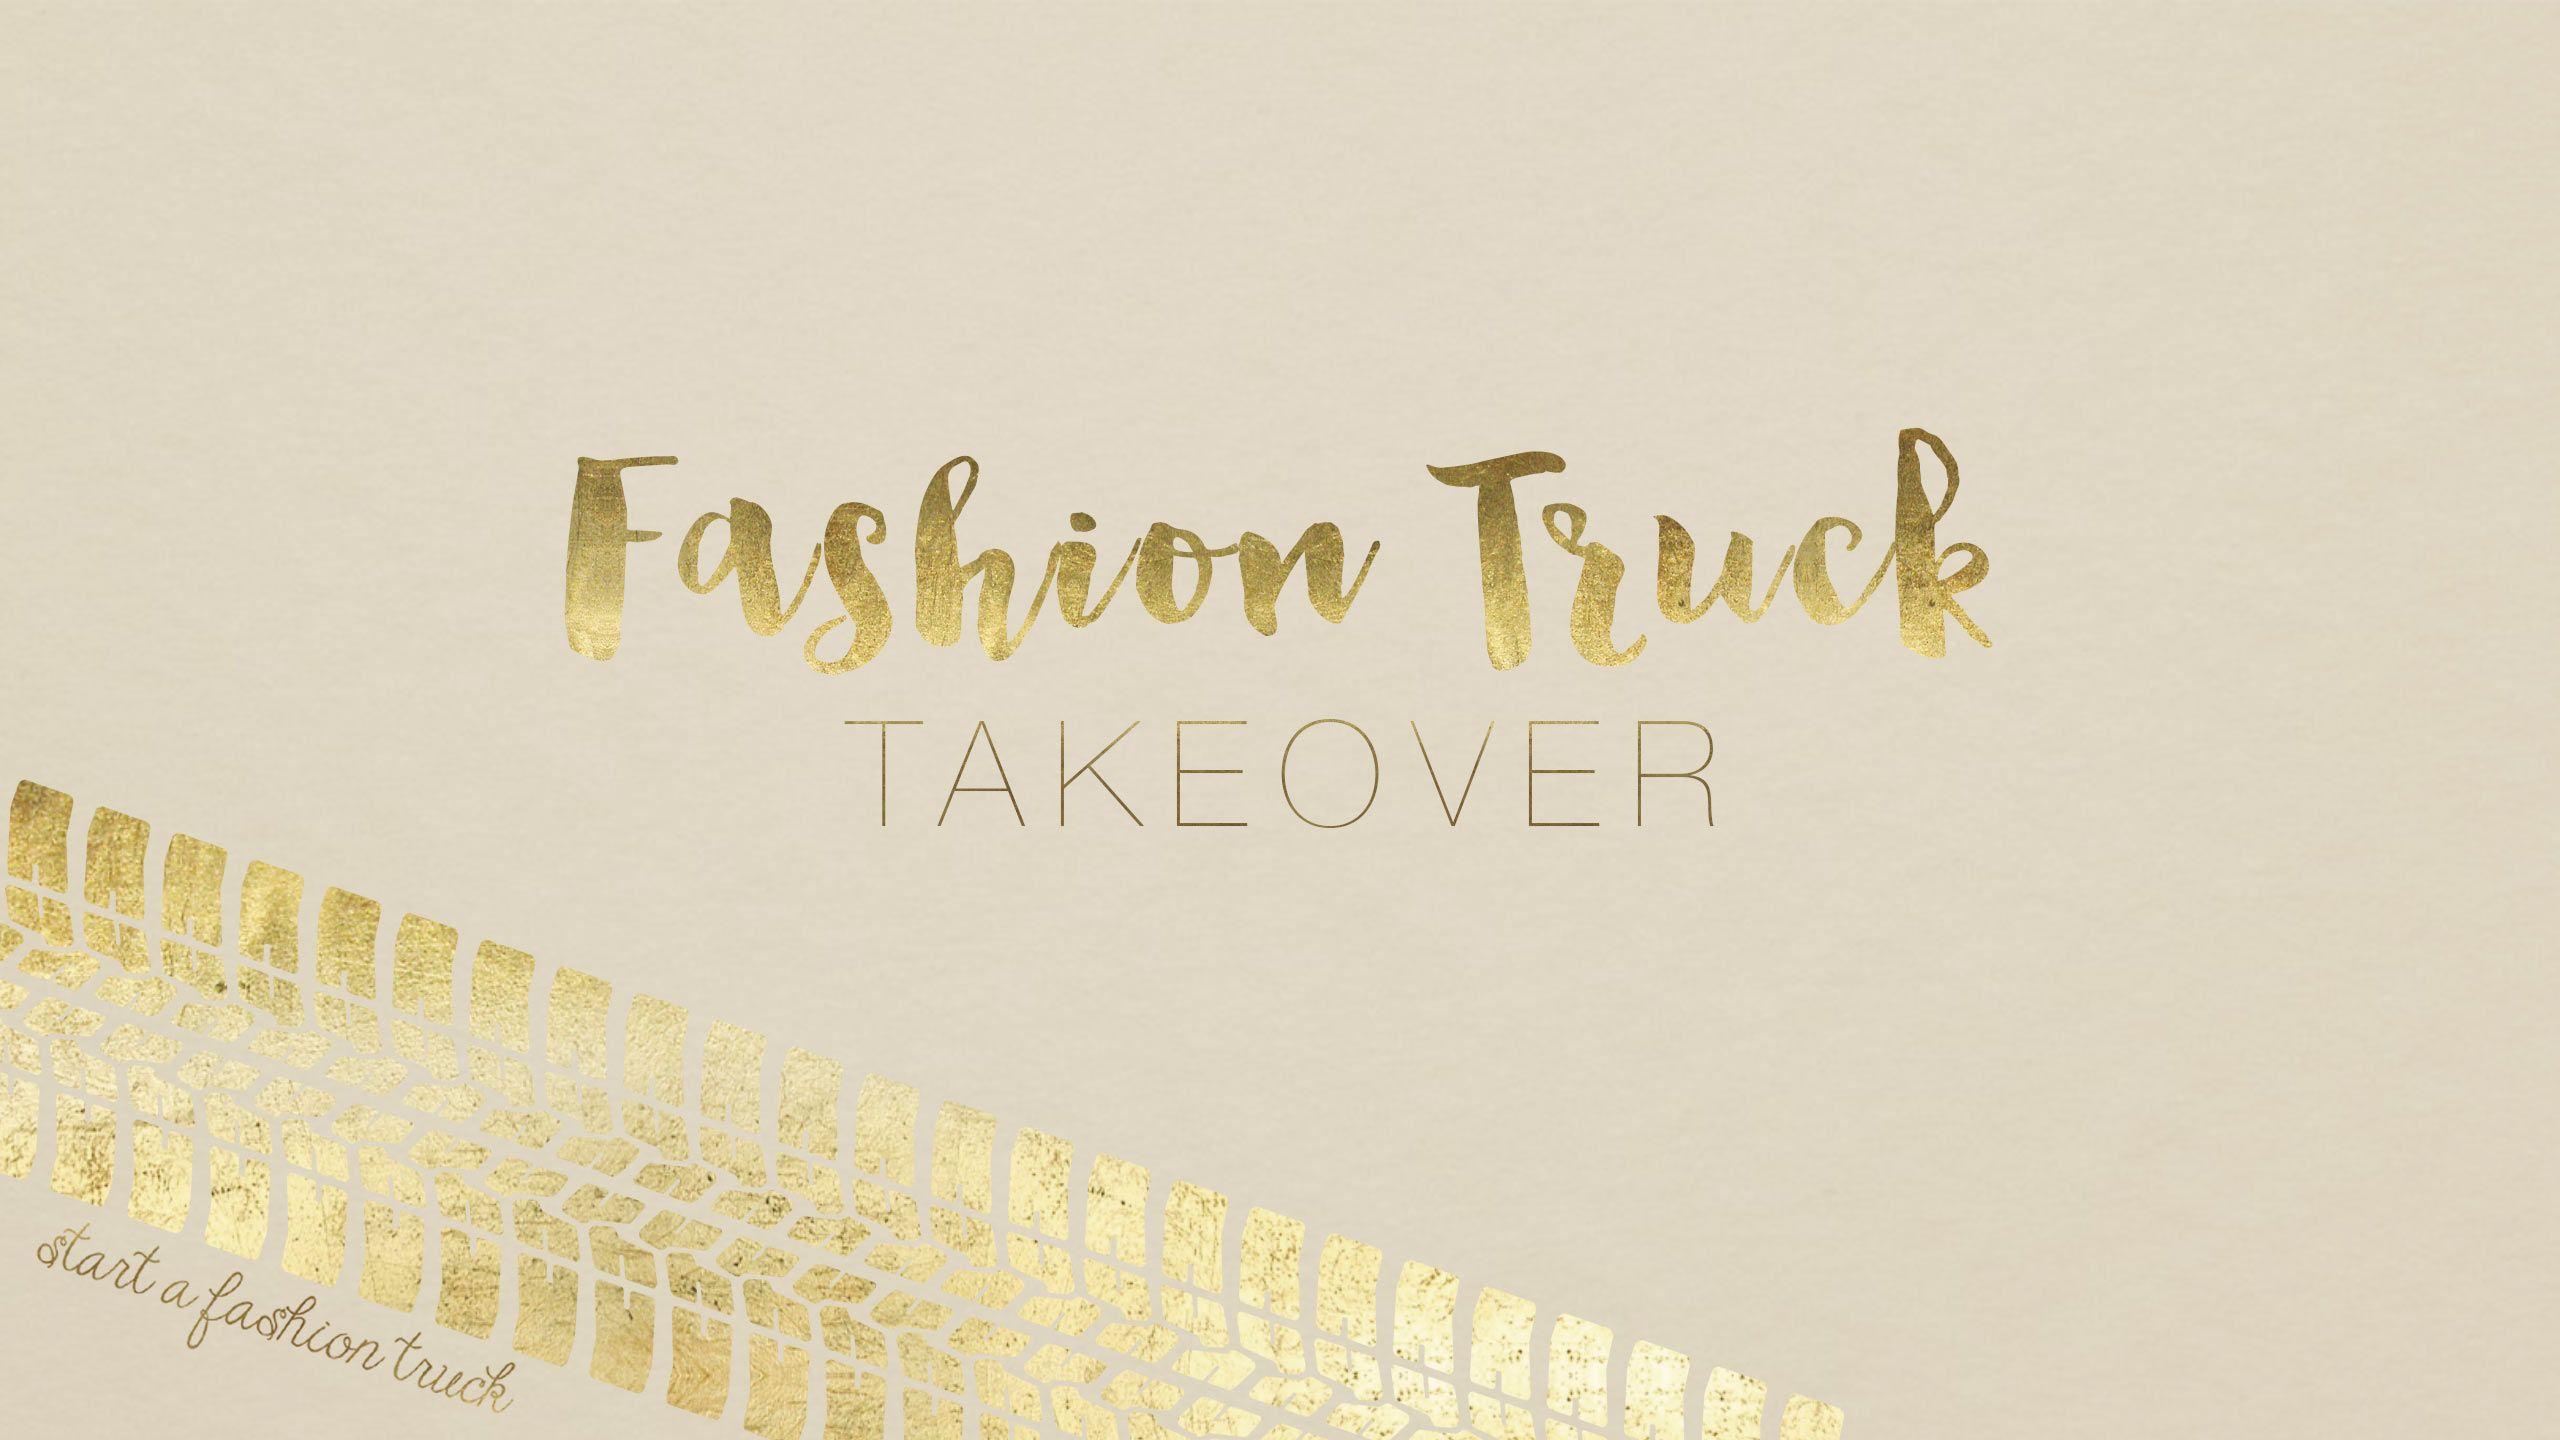 Wallpaper: Fashion Truck Takeover. Start a Fashion Truck